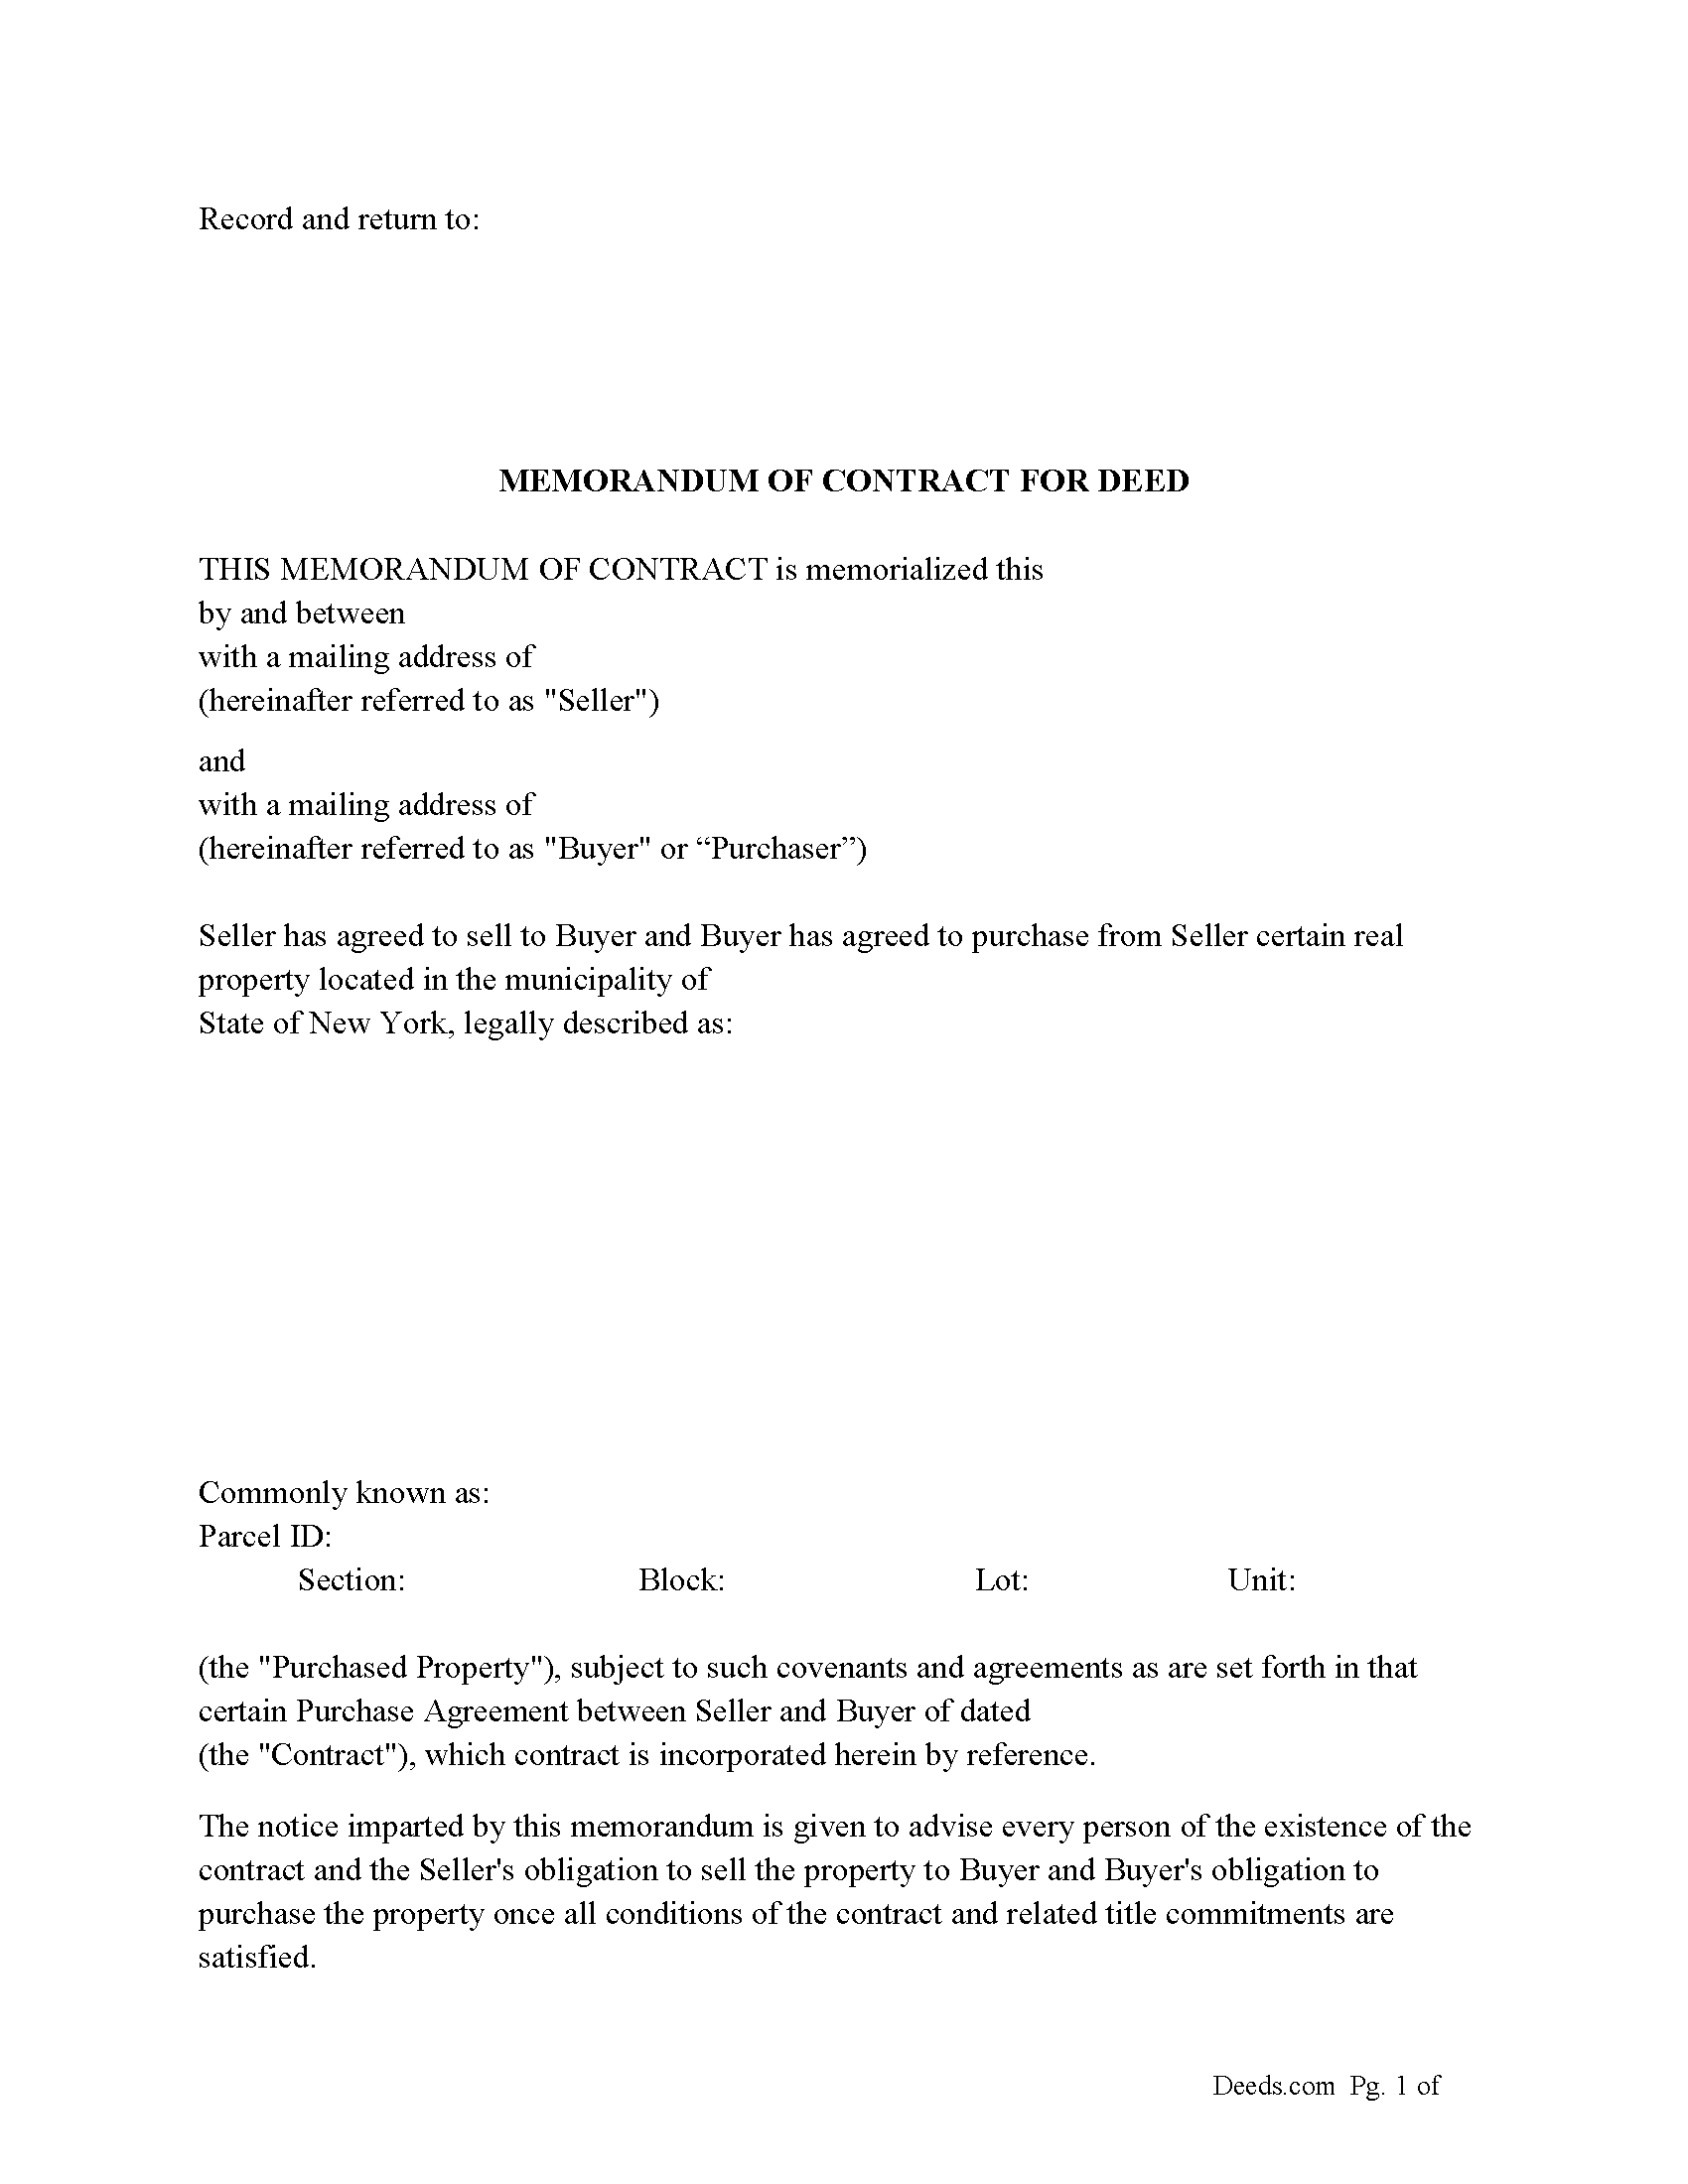 Putnam County Memorandum of Contract for Deed Form